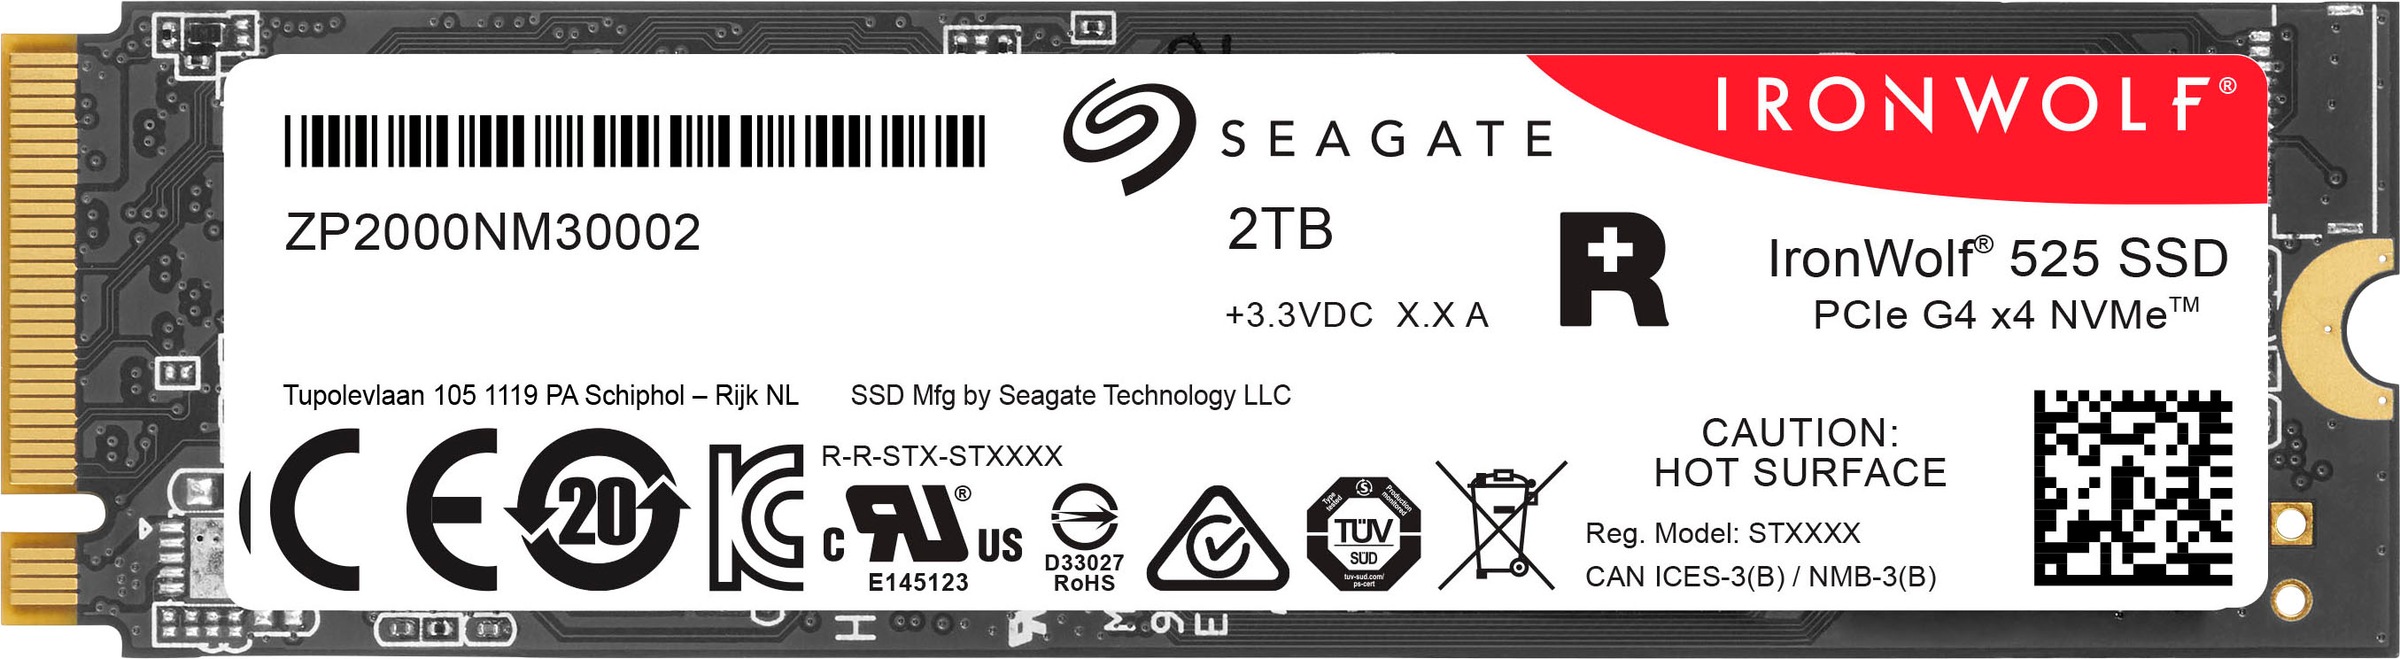 Seagate interne SSD »IronWolf®525«